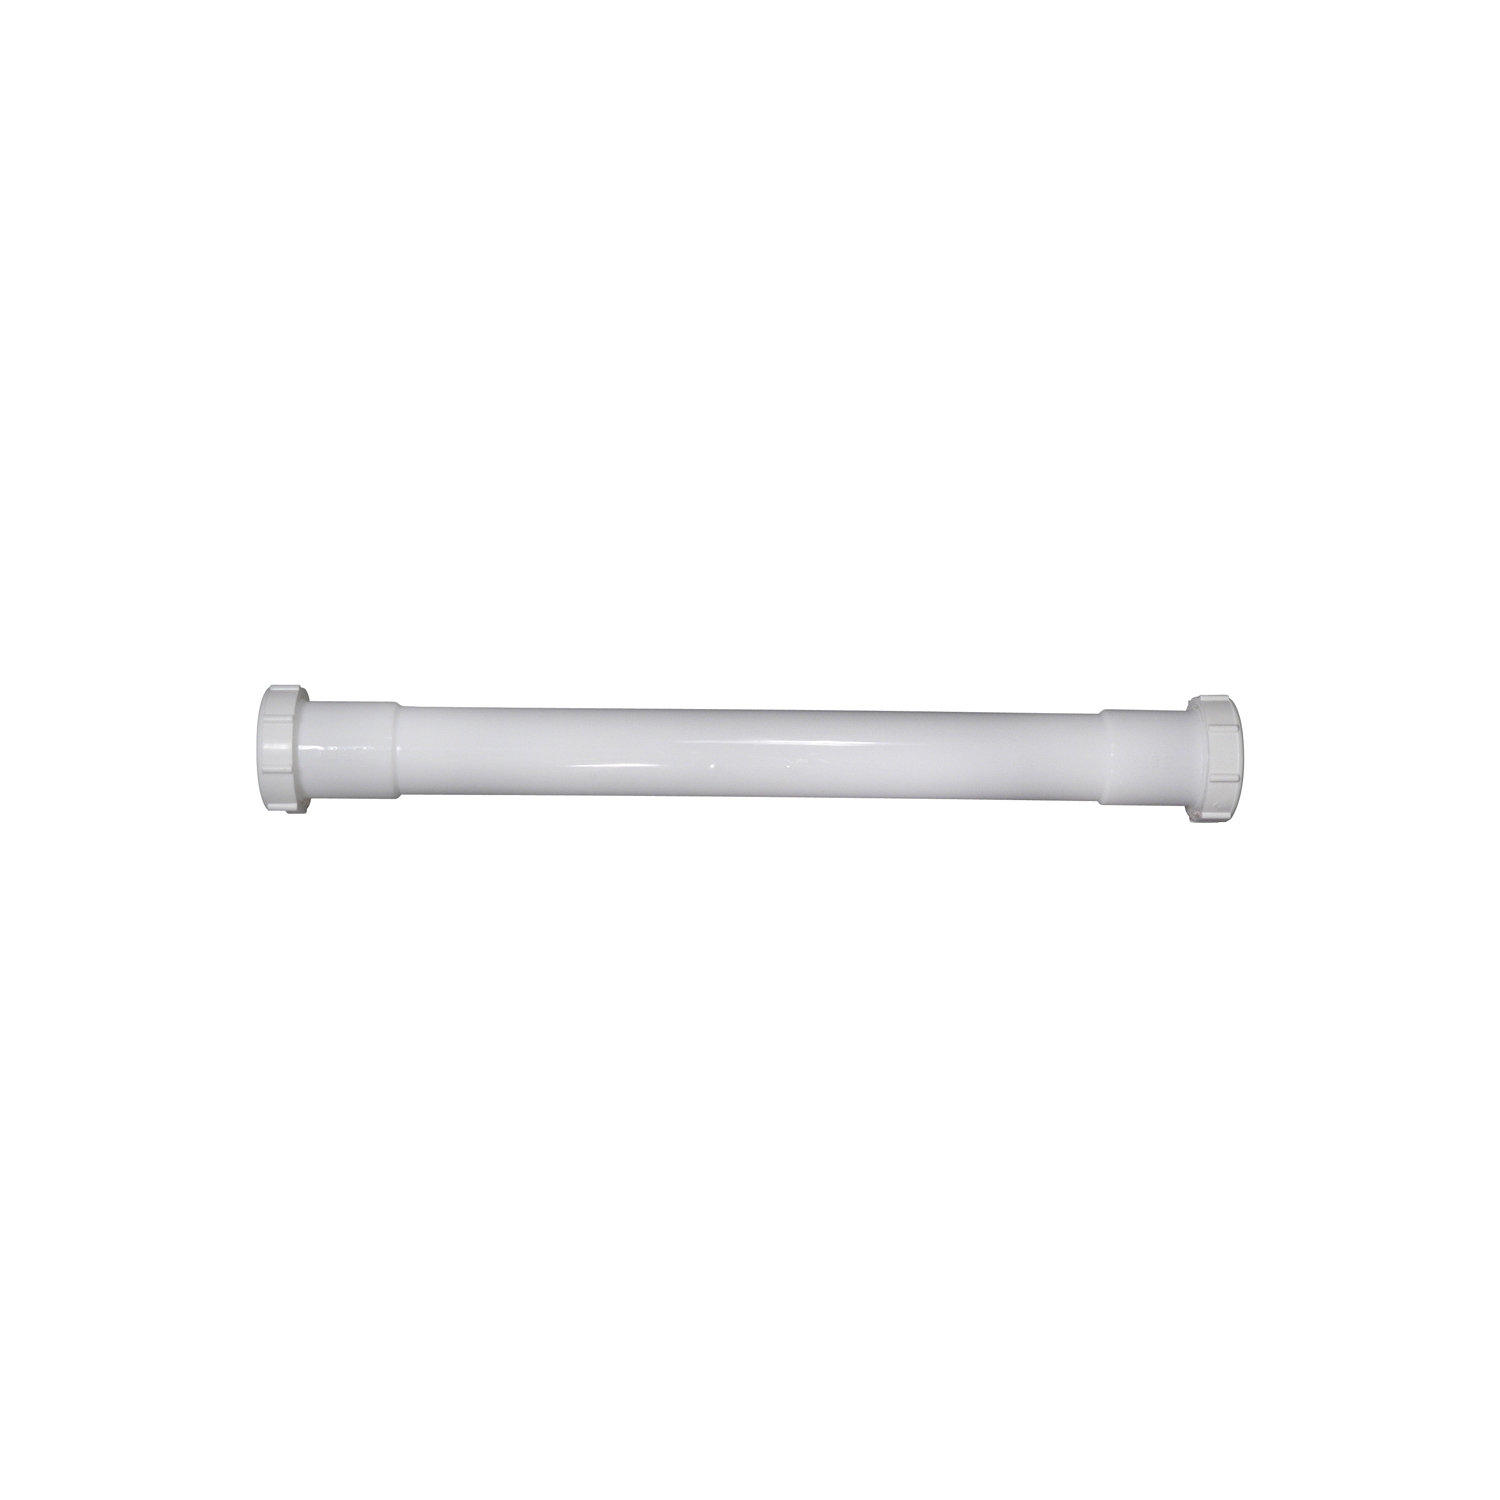 Keeney 42-16W Extension Tube, 1-1/4 in ID x 16 in L, Polypropylene, White